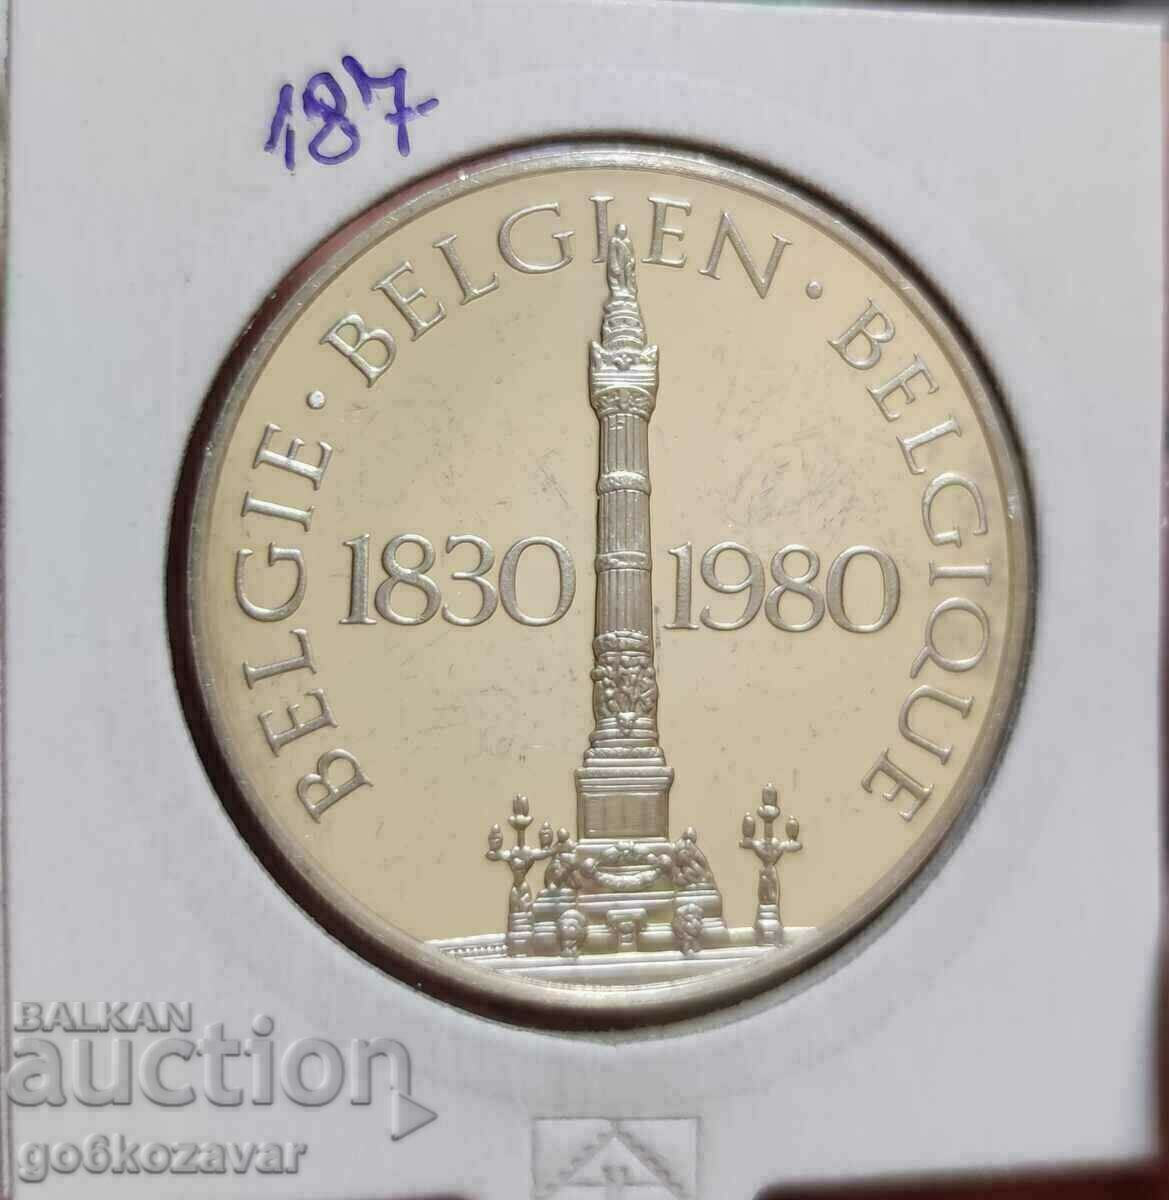 Belgium Medal Token 1980 Silver 0.925- 36mm